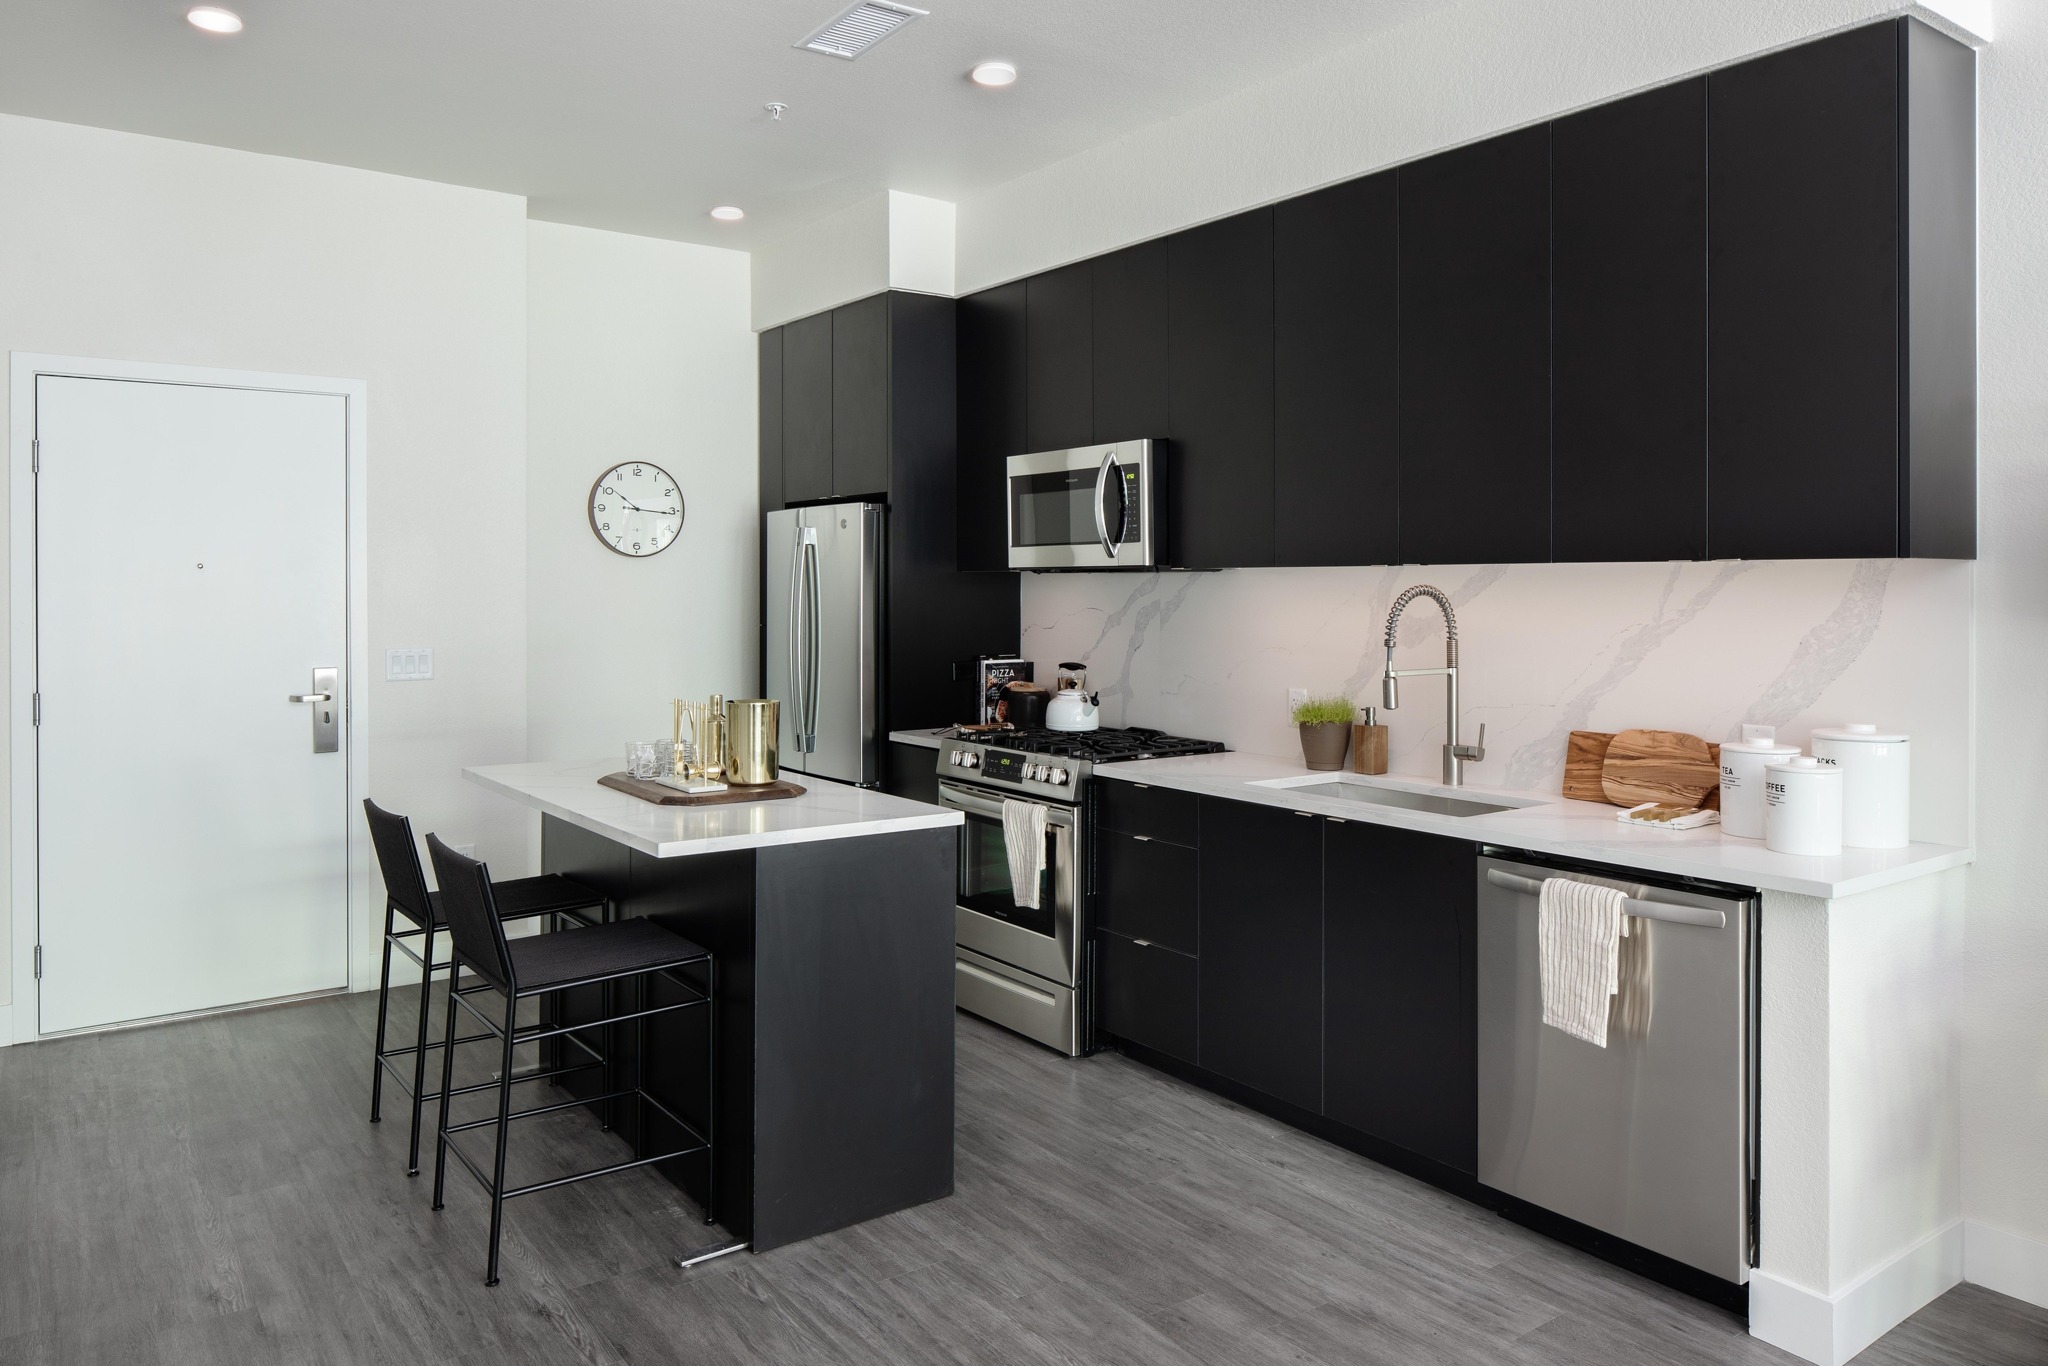 kitchen view with island and quartz backsplash modera art park apartment homes for rent in denver colorado